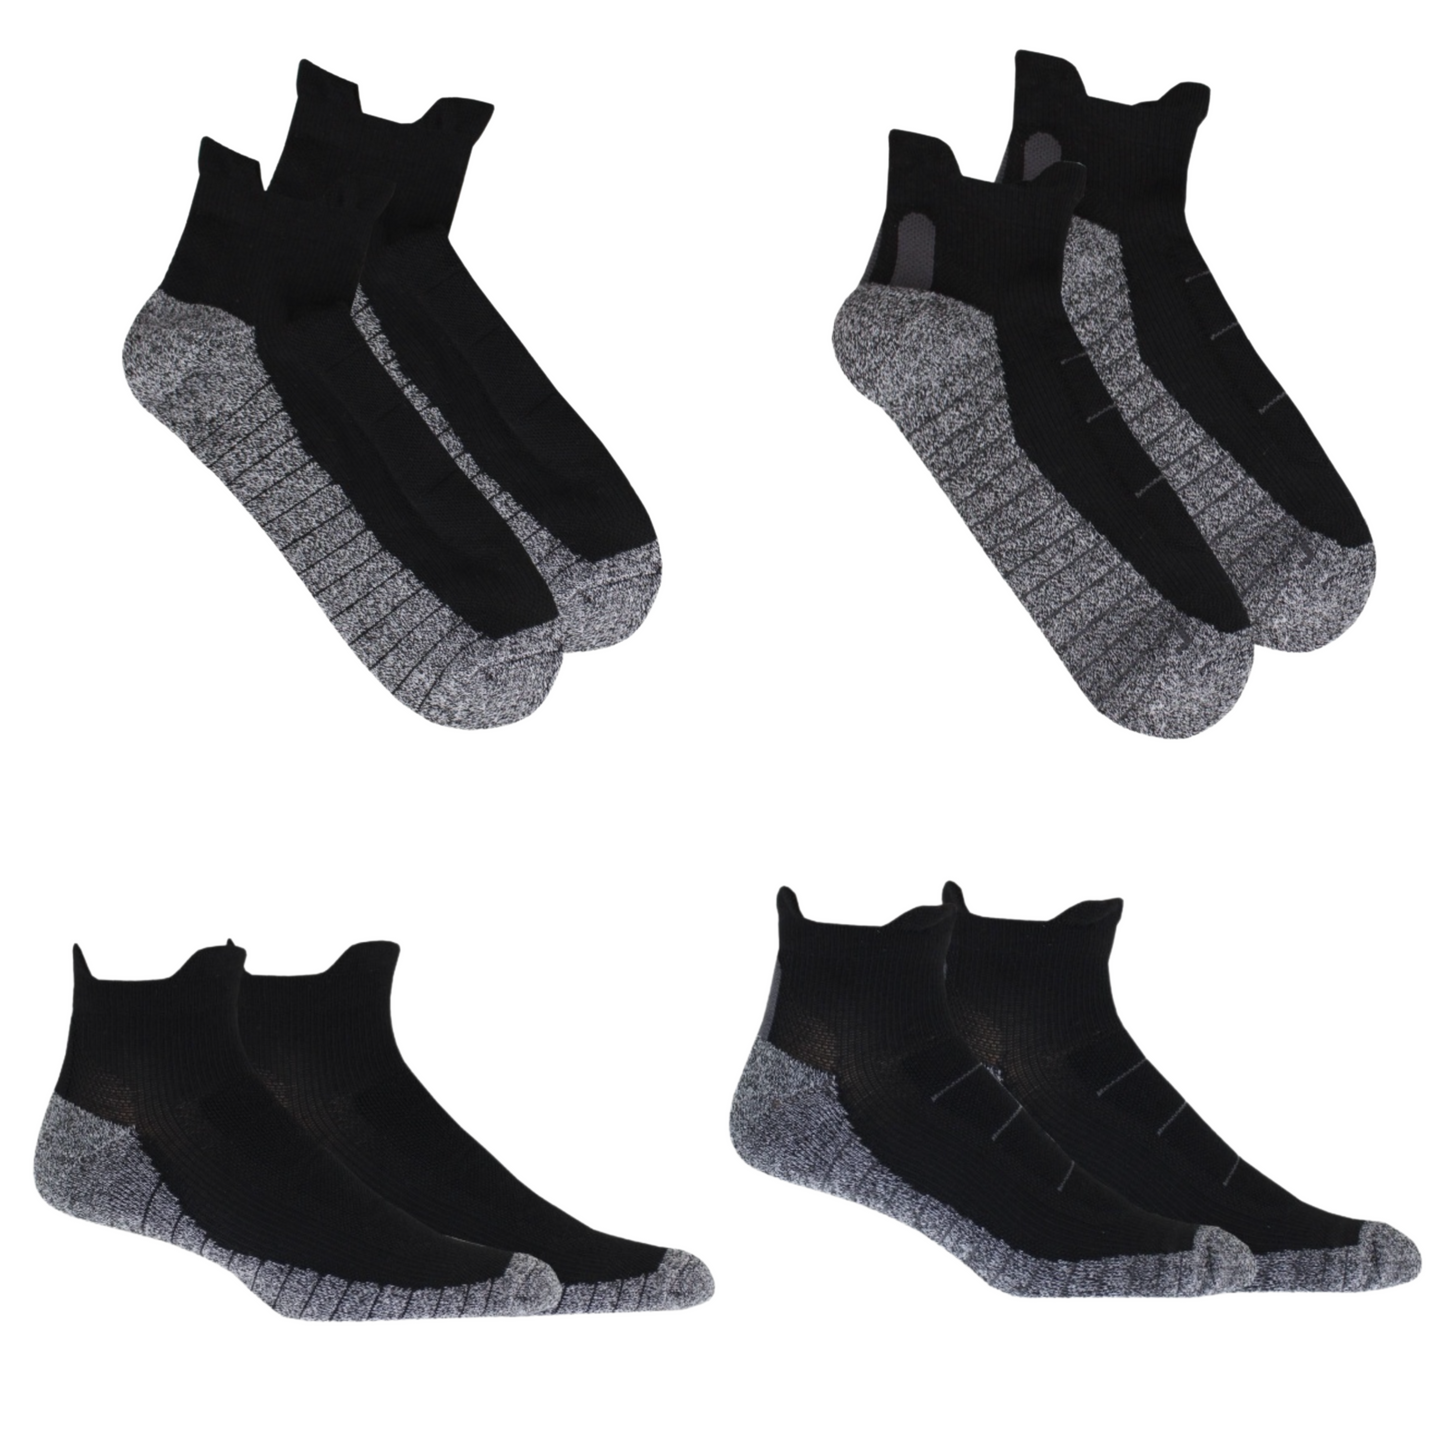 D&CO Training Ankle Socks- Performance Poly Blend - Technical - 2 PK